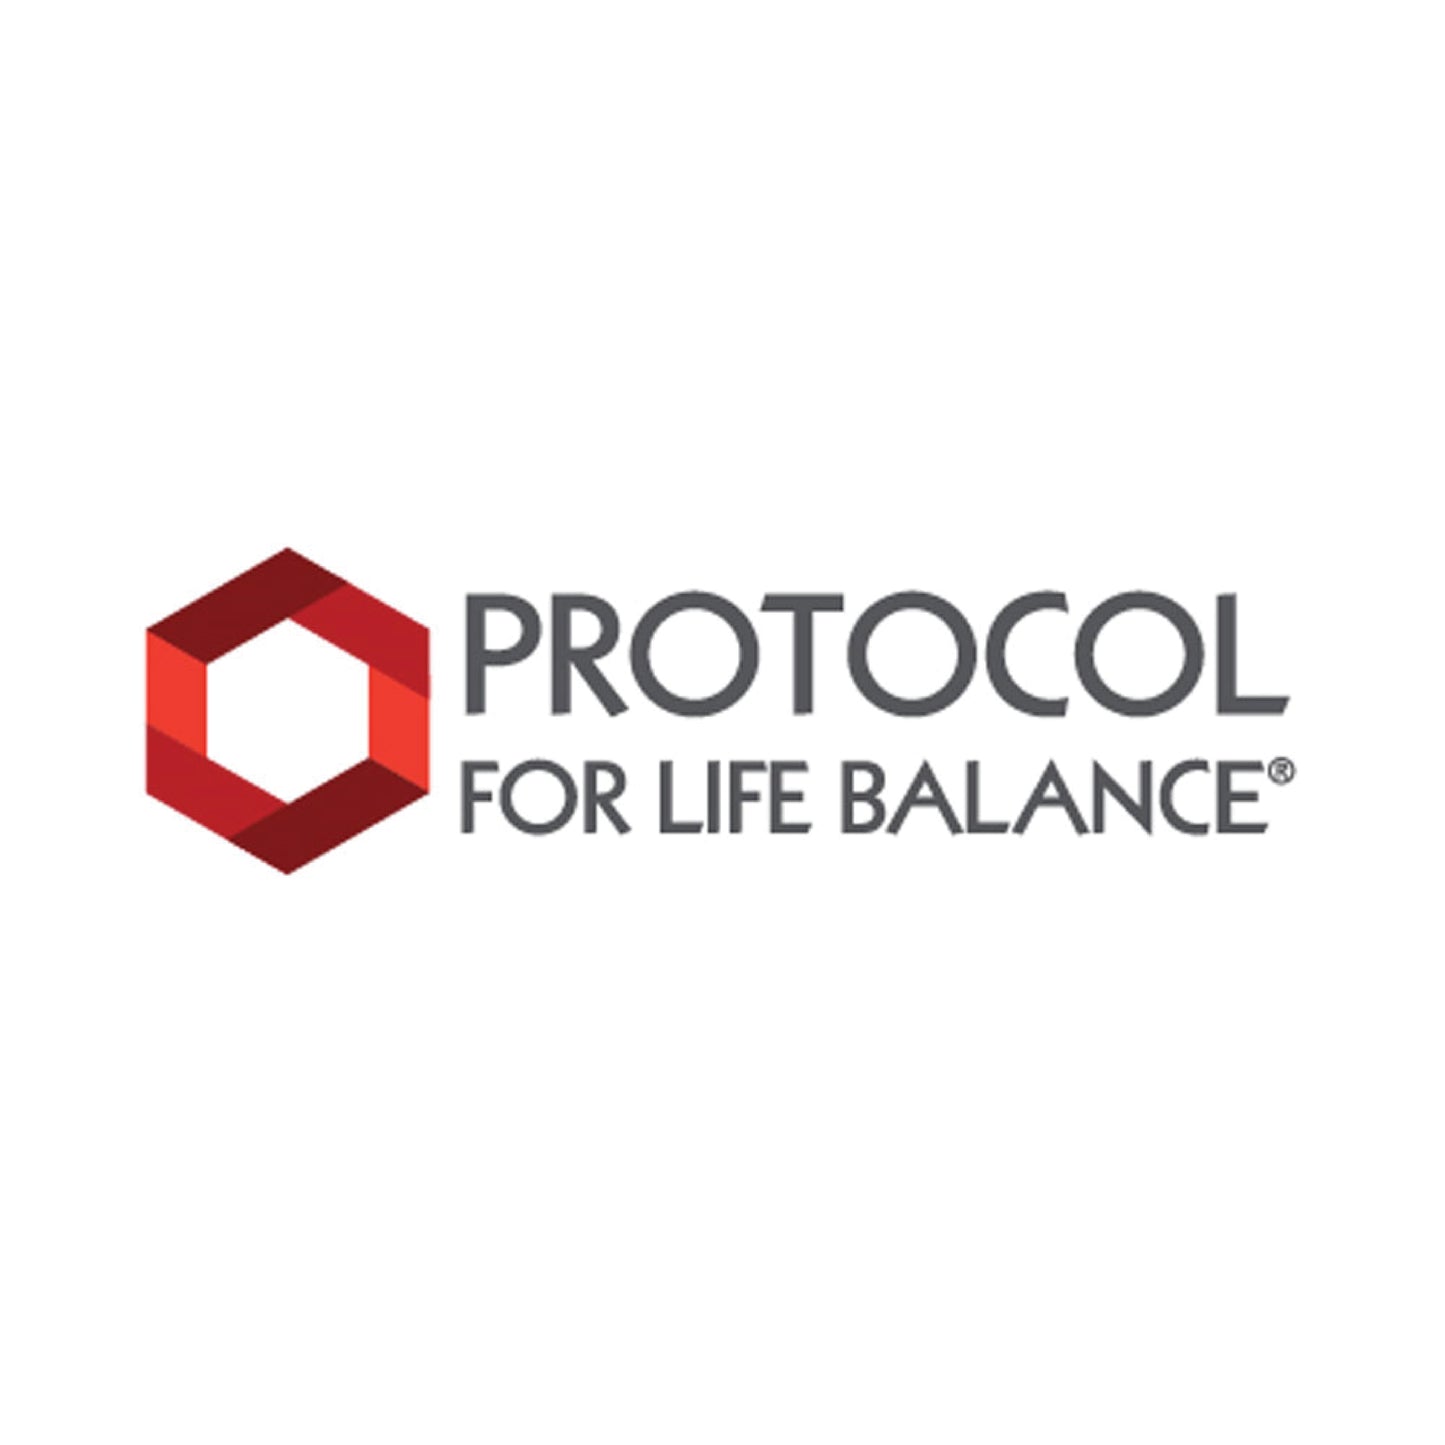 Protocol for Life Balance, L-Glutamine, 1,000 mg, 120 Veg Capsules